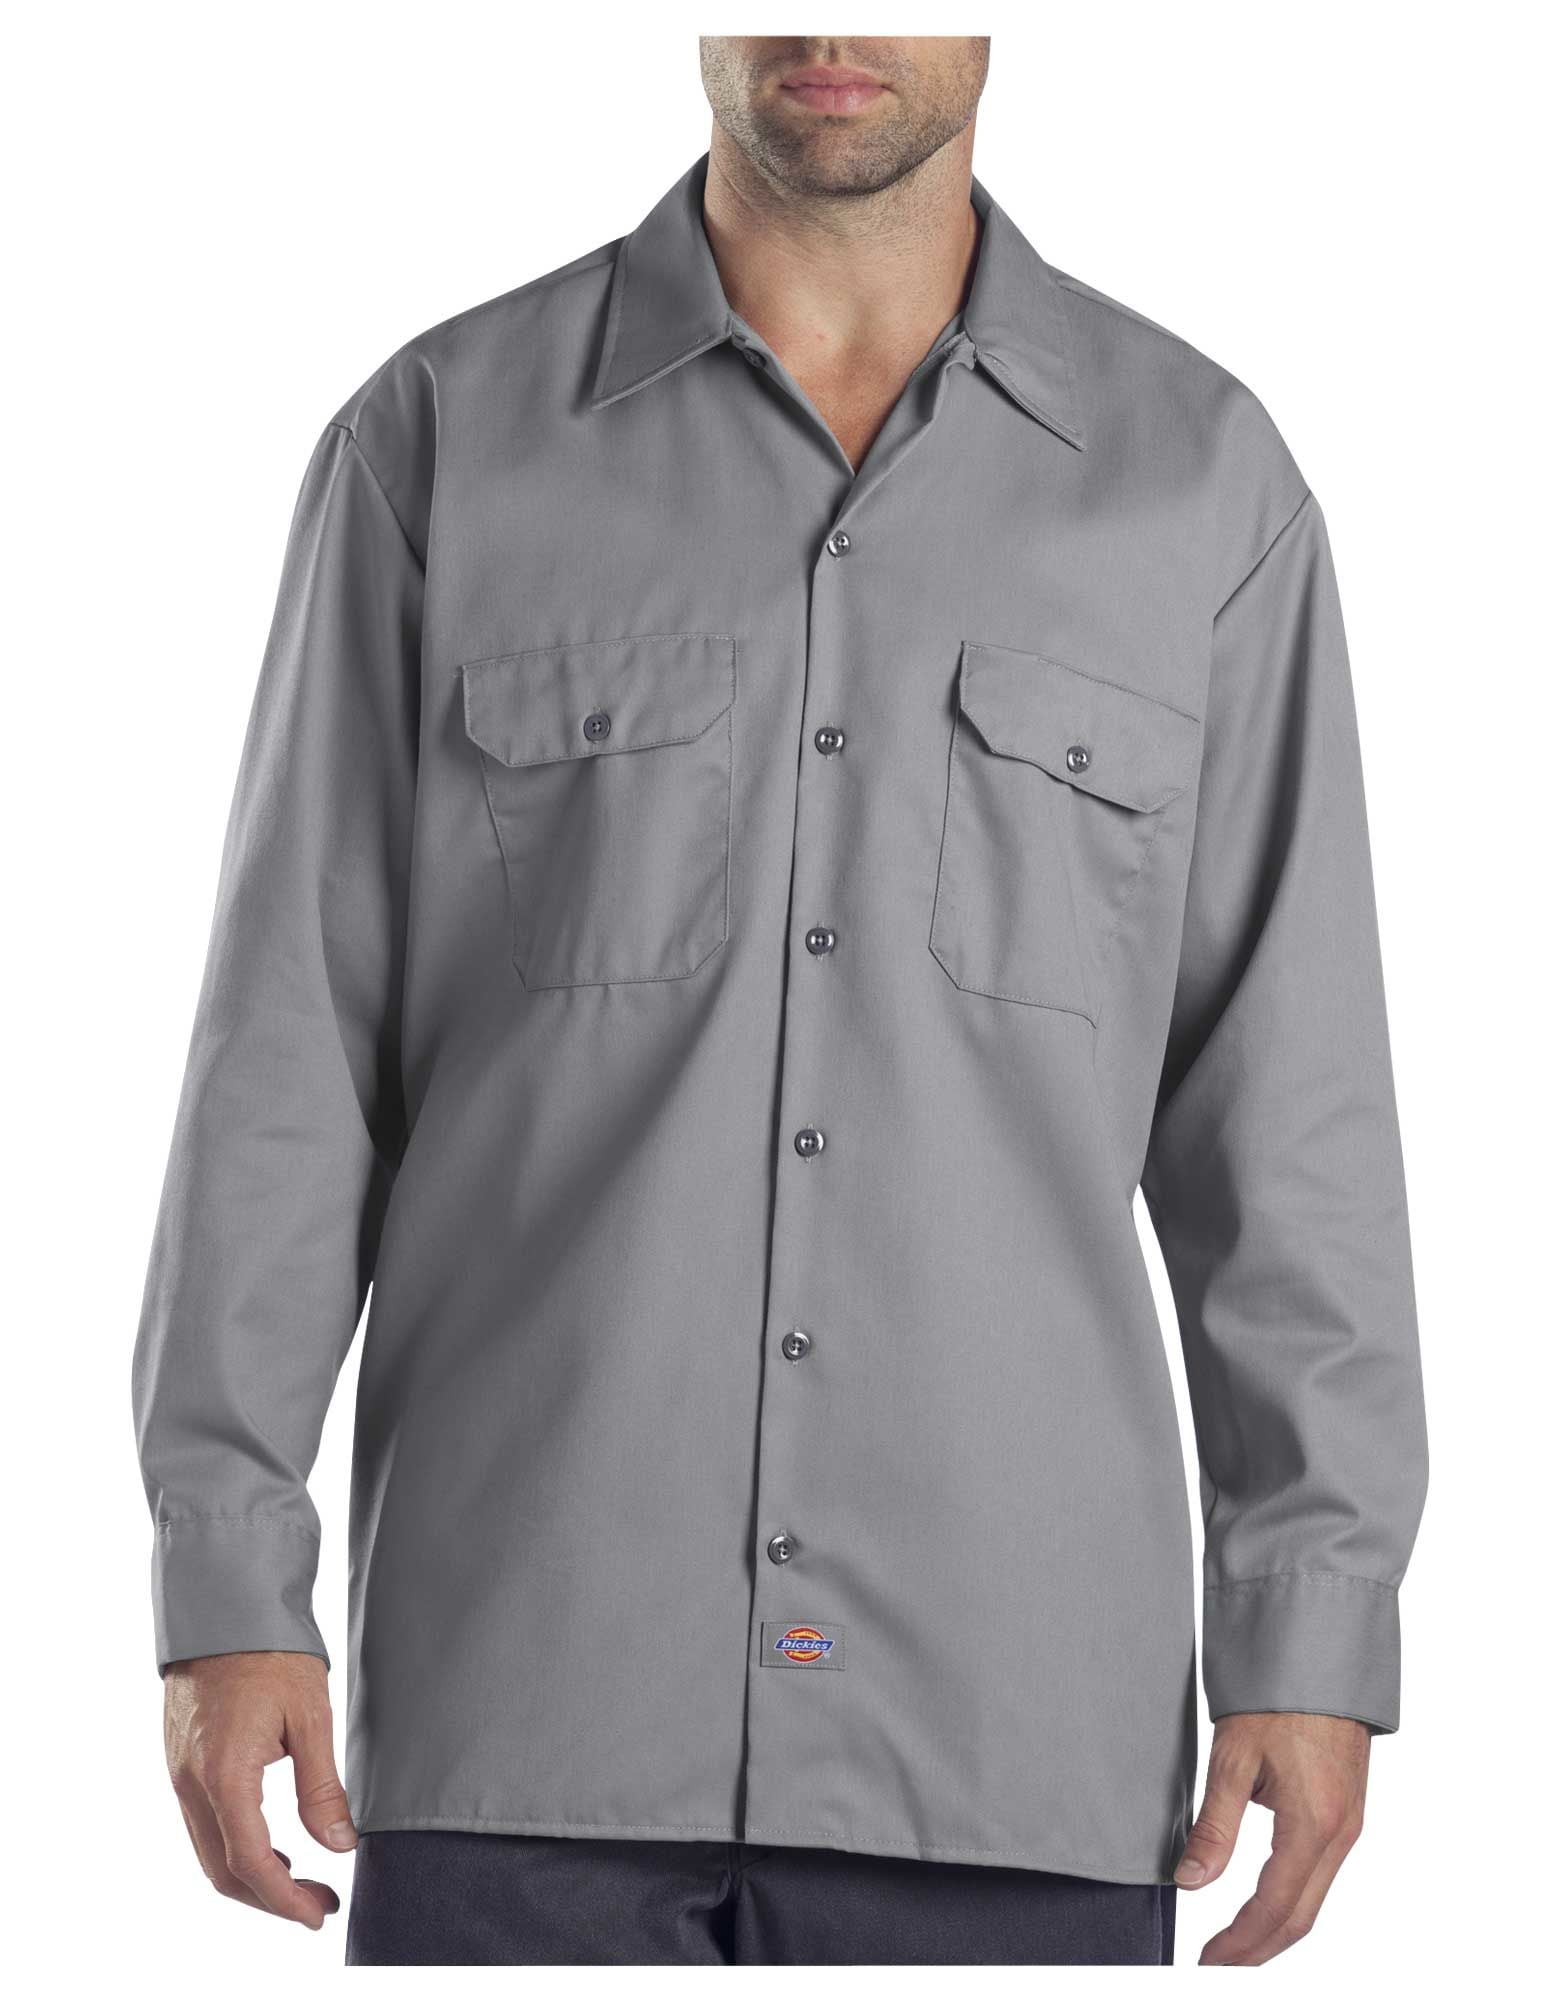 Dickies Mens Long-Sleeve Work Shirt, 3T, Silver | Walmart Canada